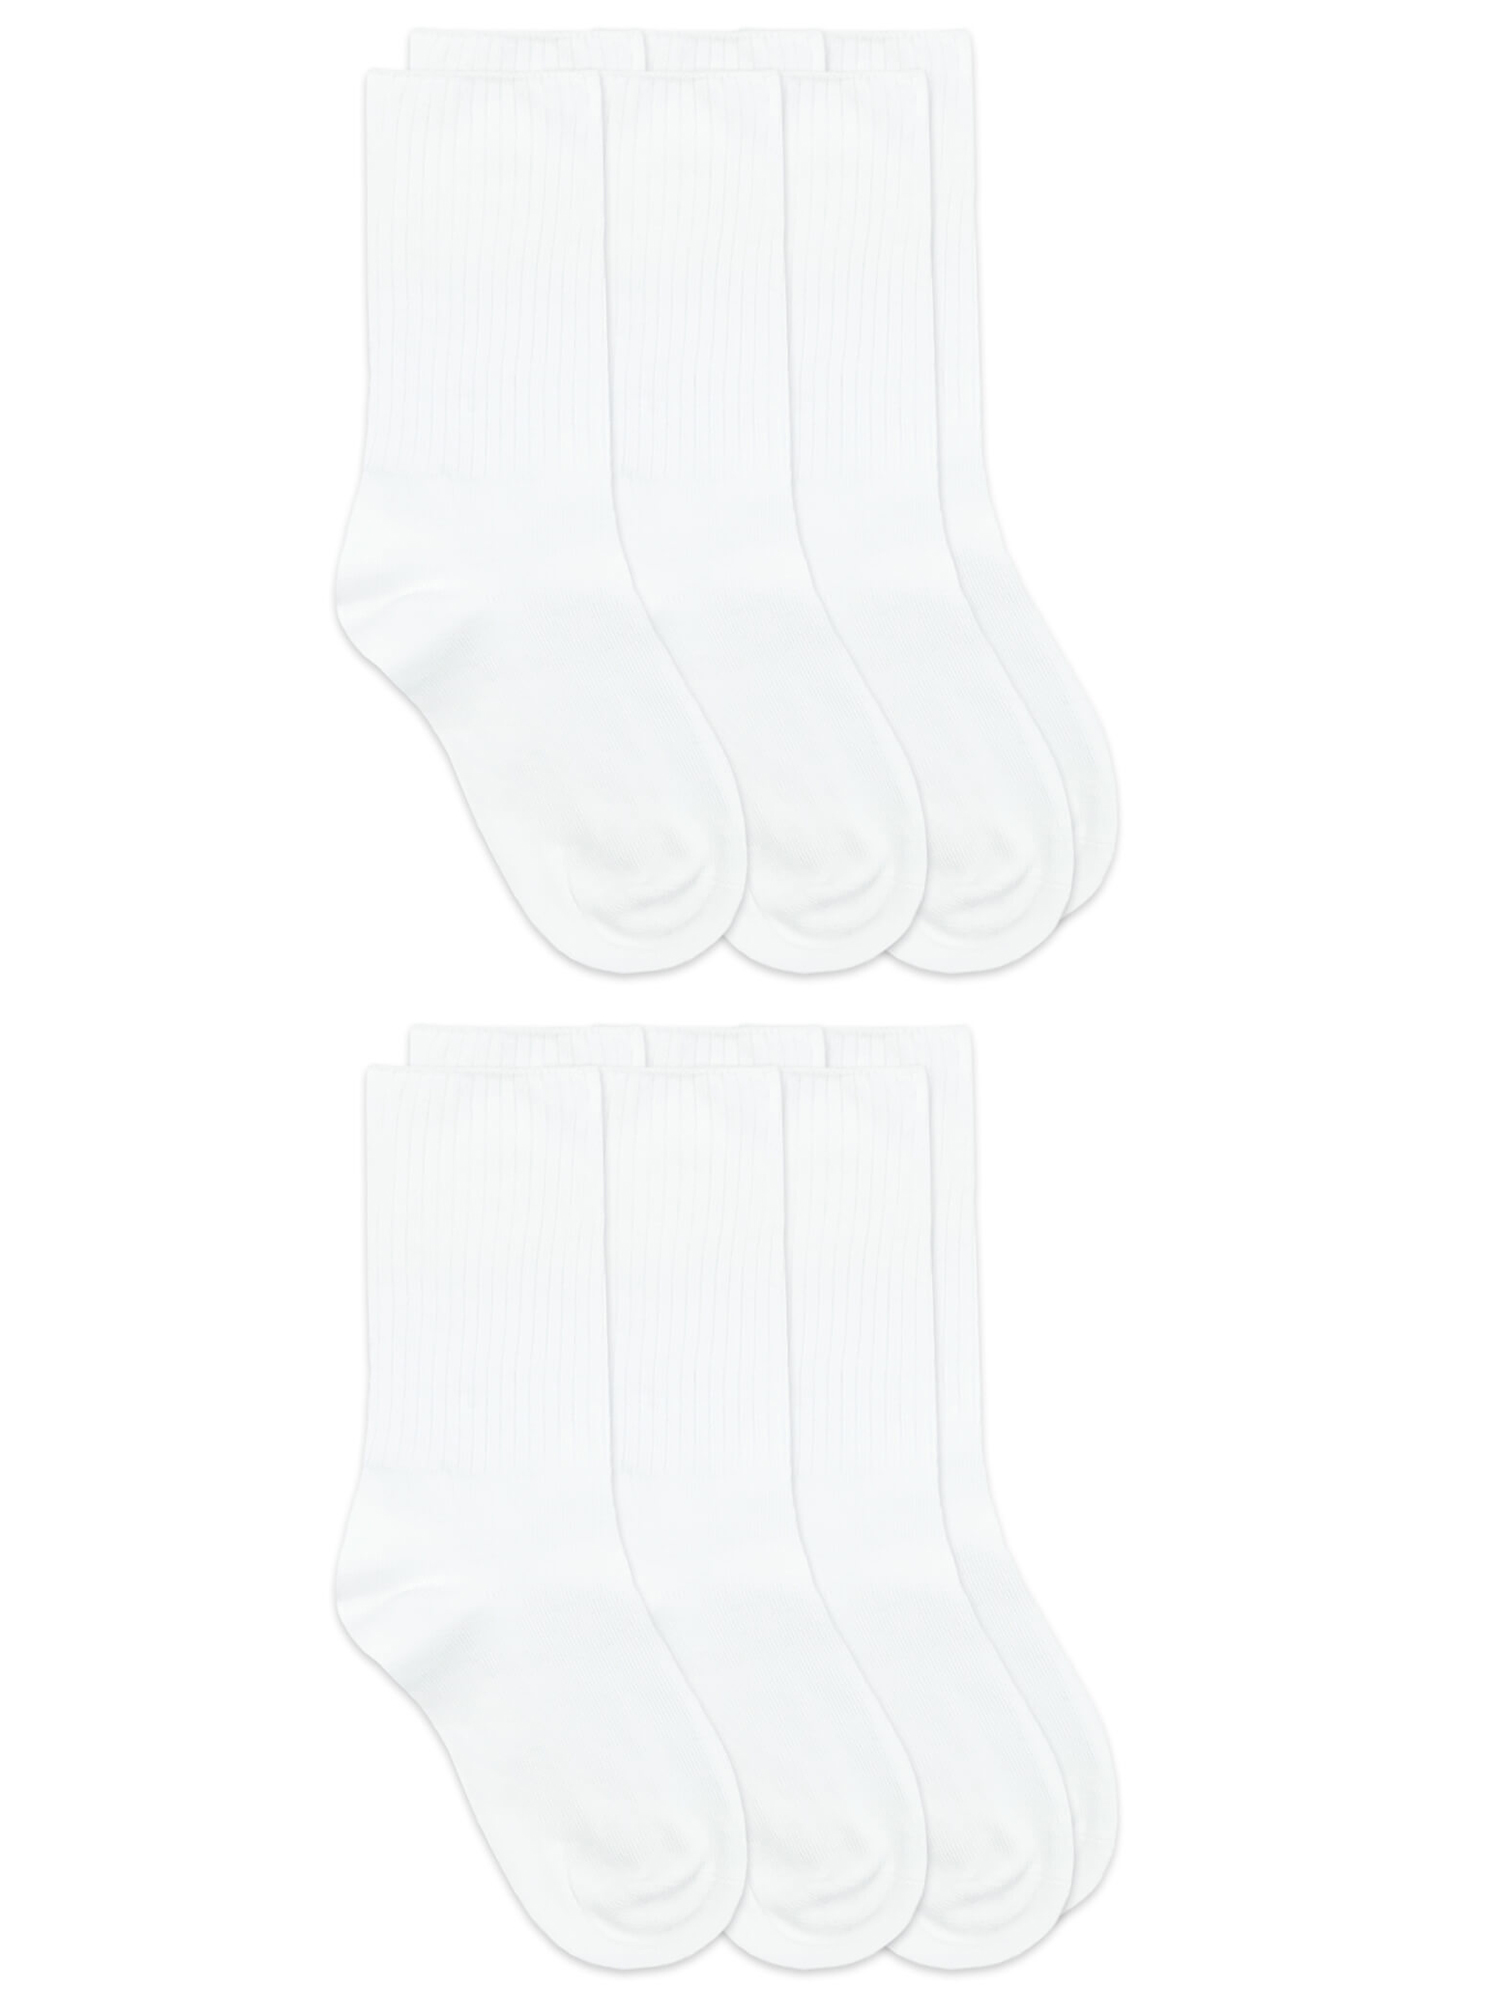 Jefferies Socks Boys Socks, 6 Pack Crew School Uniform Smooth Toe Rib Casual Cotton, Sizes XS - L - image 1 of 2